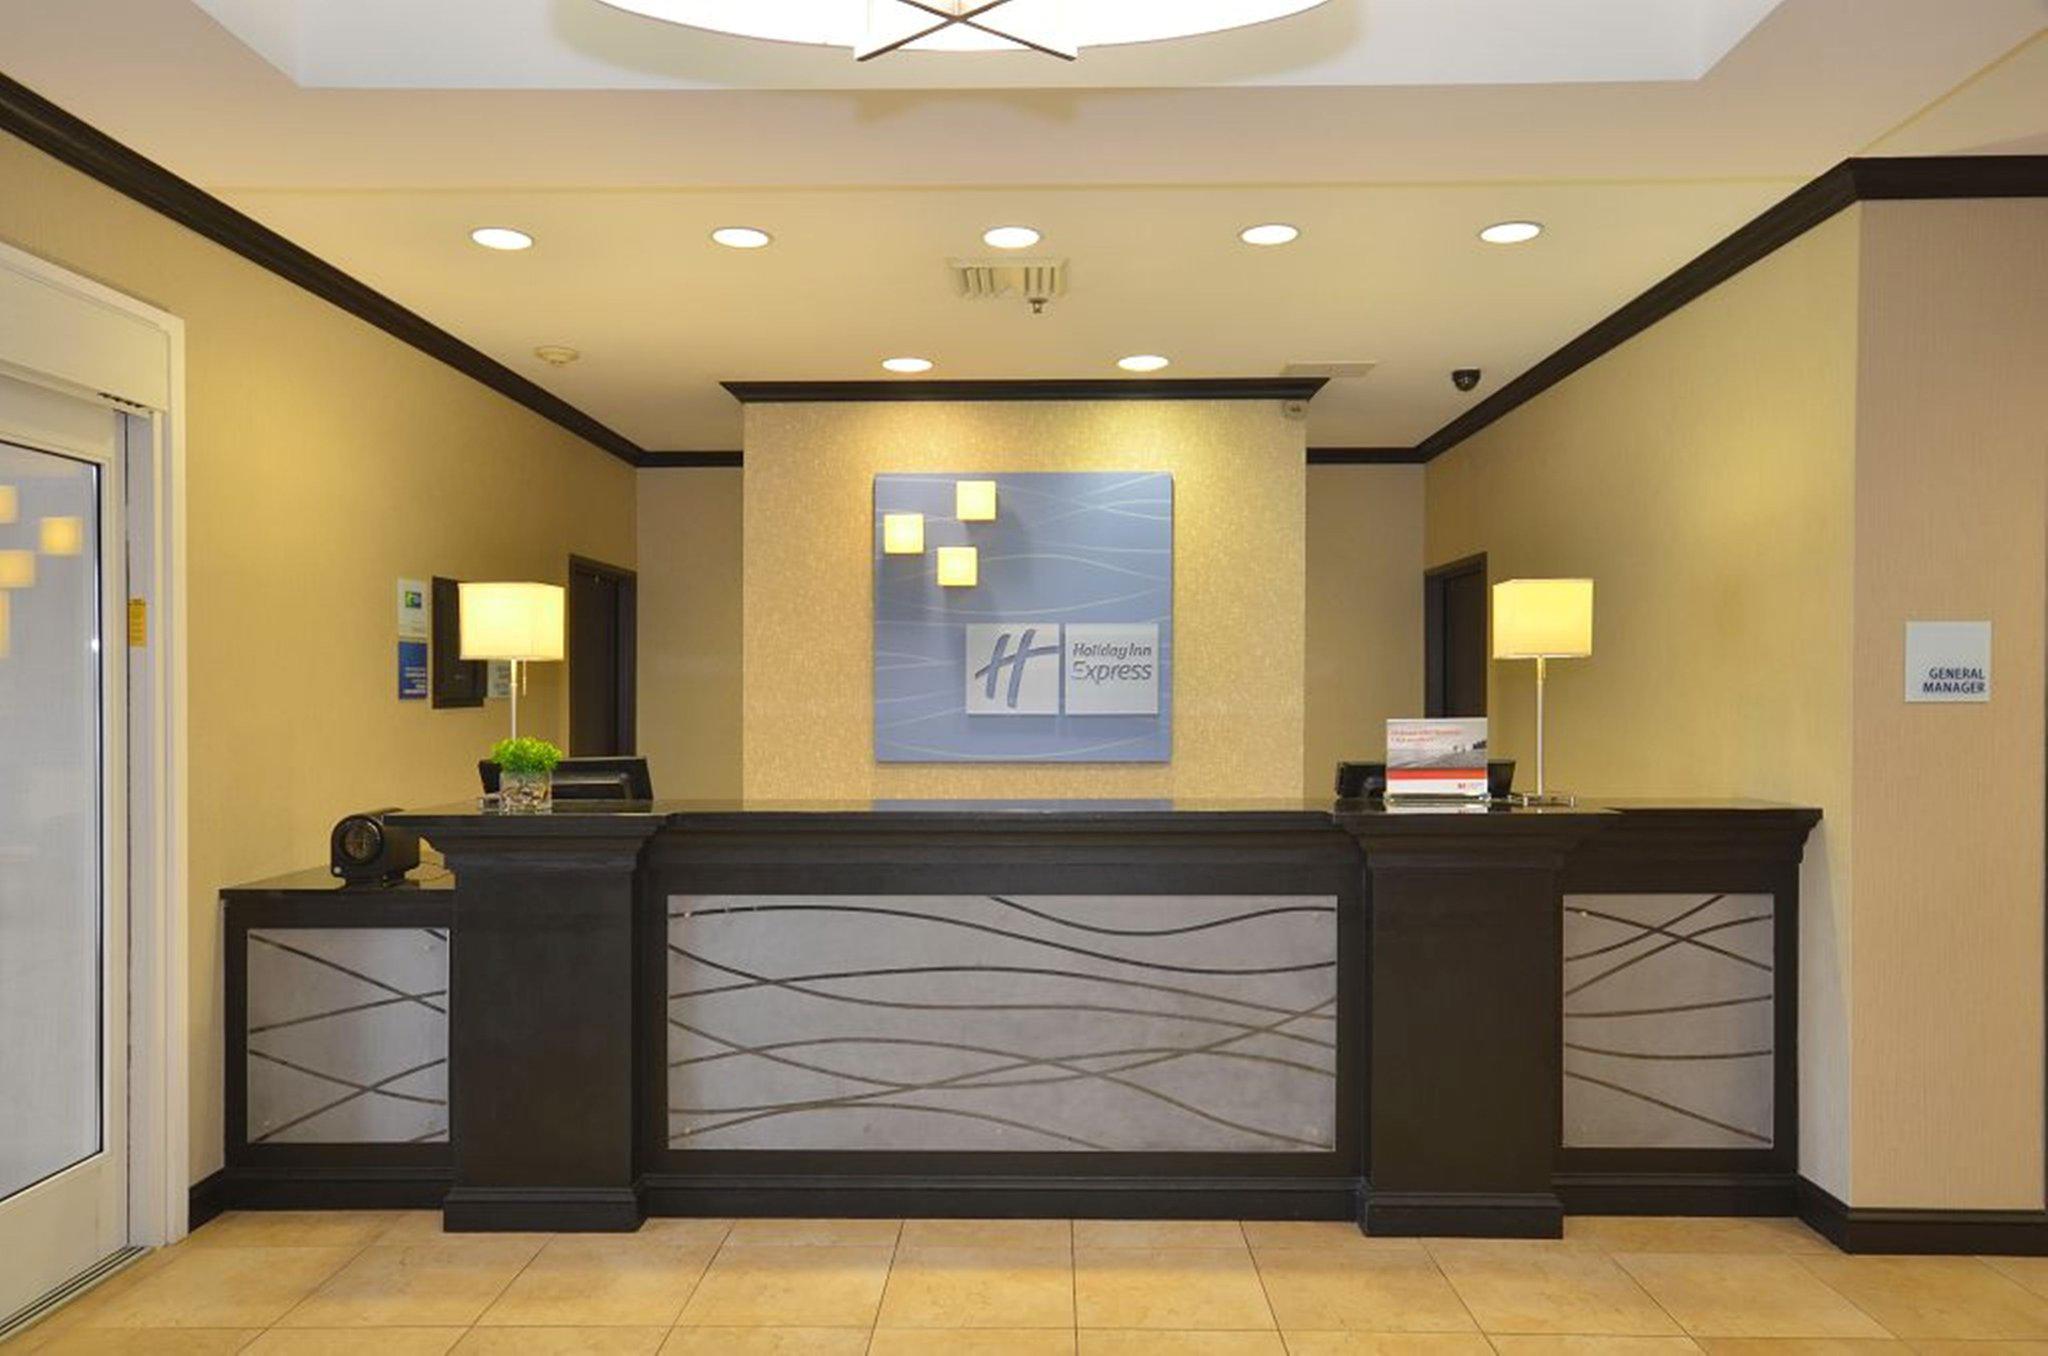 Holiday Inn Express & Suites Farmington Photo